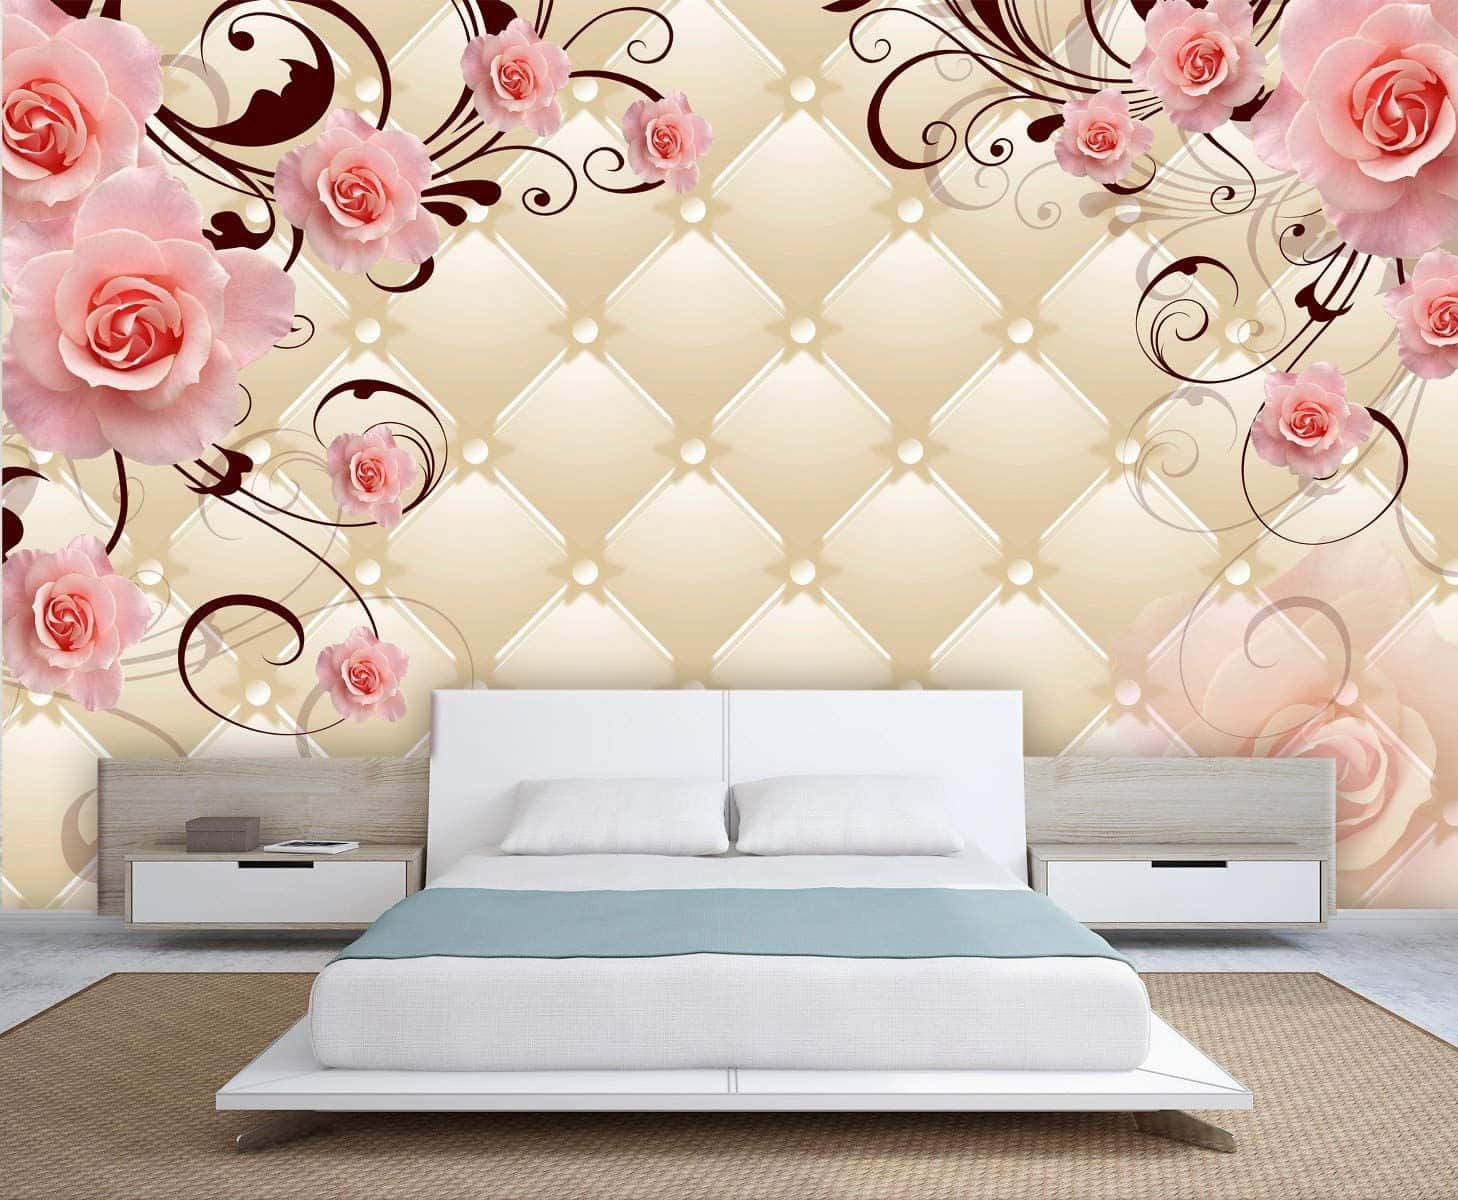 Floating Bed Massive Flowers Wallpaper